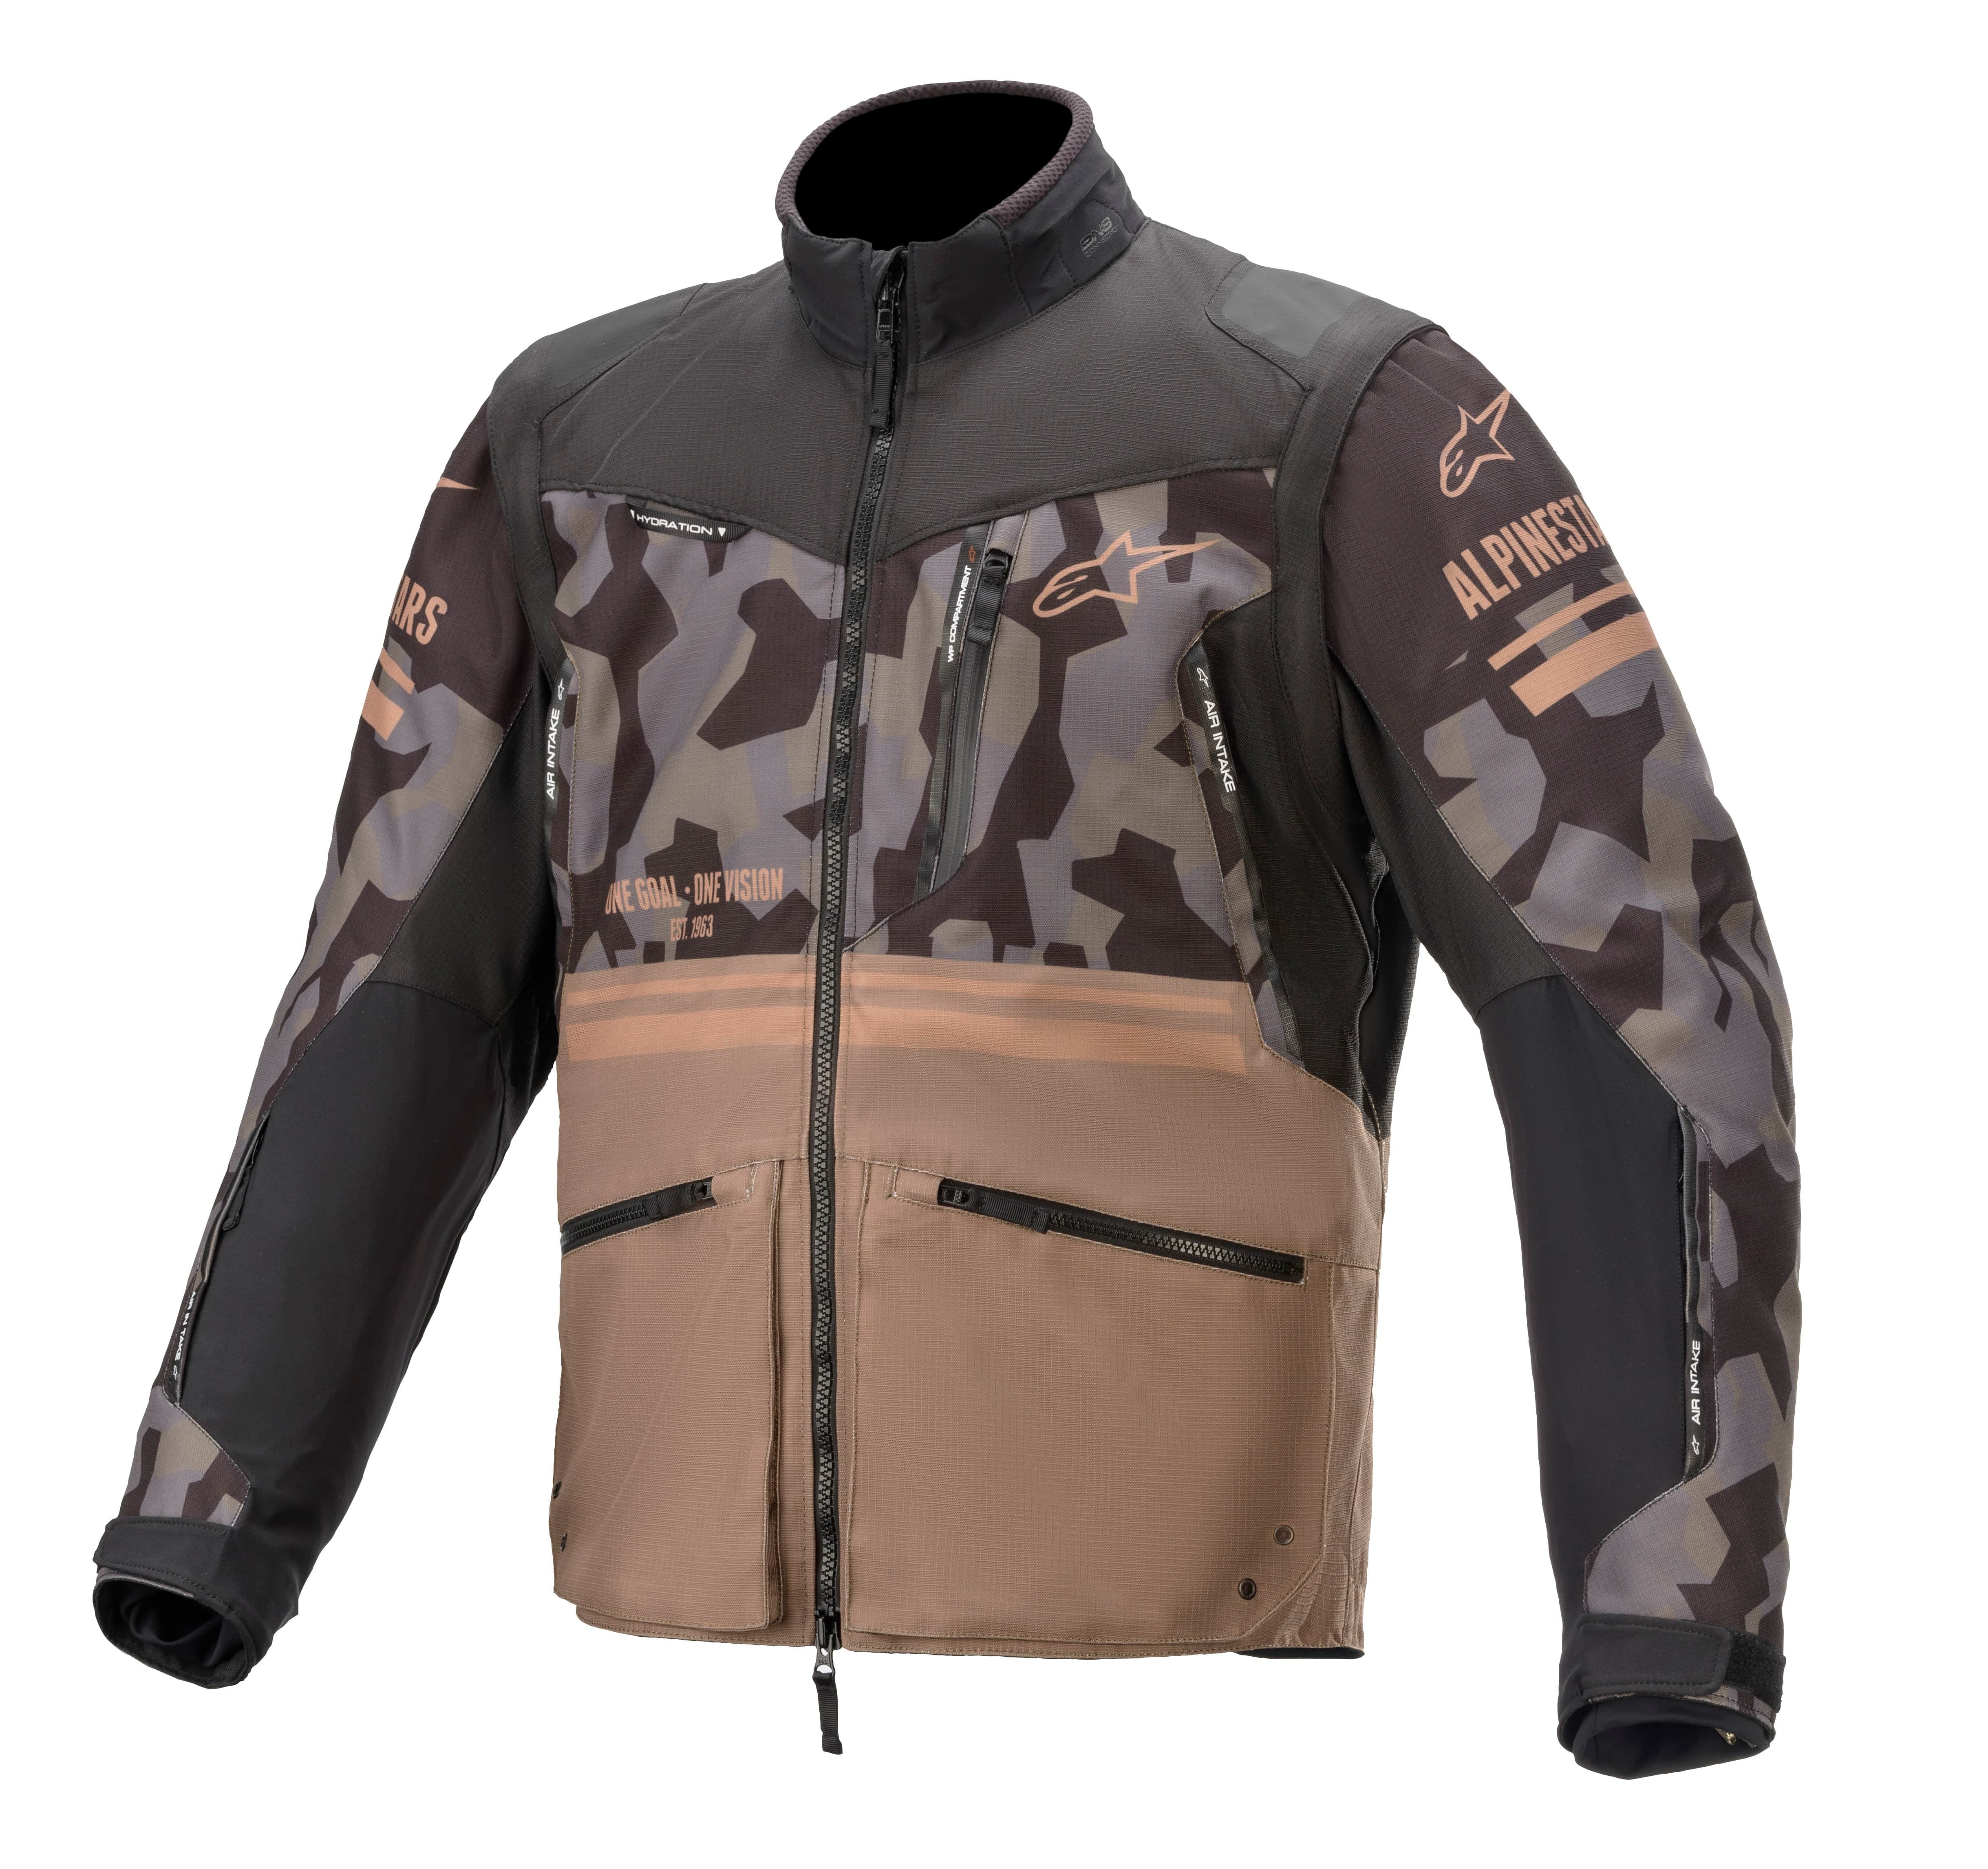 Western Powersports Jacket Mud Camo/Sand / 2X Venture R Jacket By Alpinestars 3703019-849-2XL